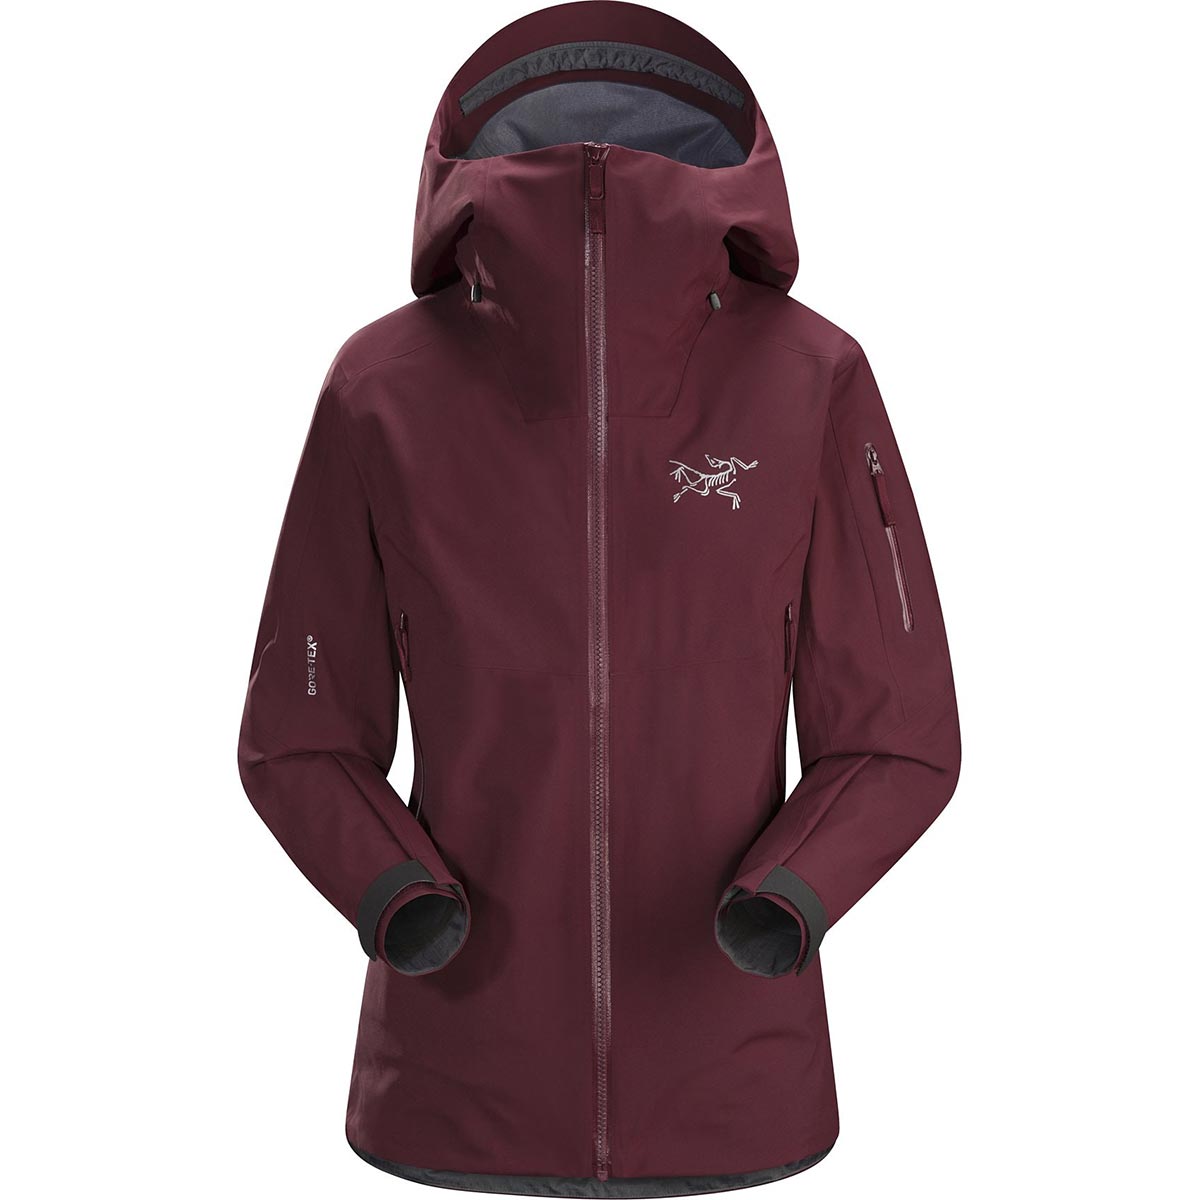 Arc'teryx Sentinel Jacket, women's, discontinued Fall 2018 model (free ...